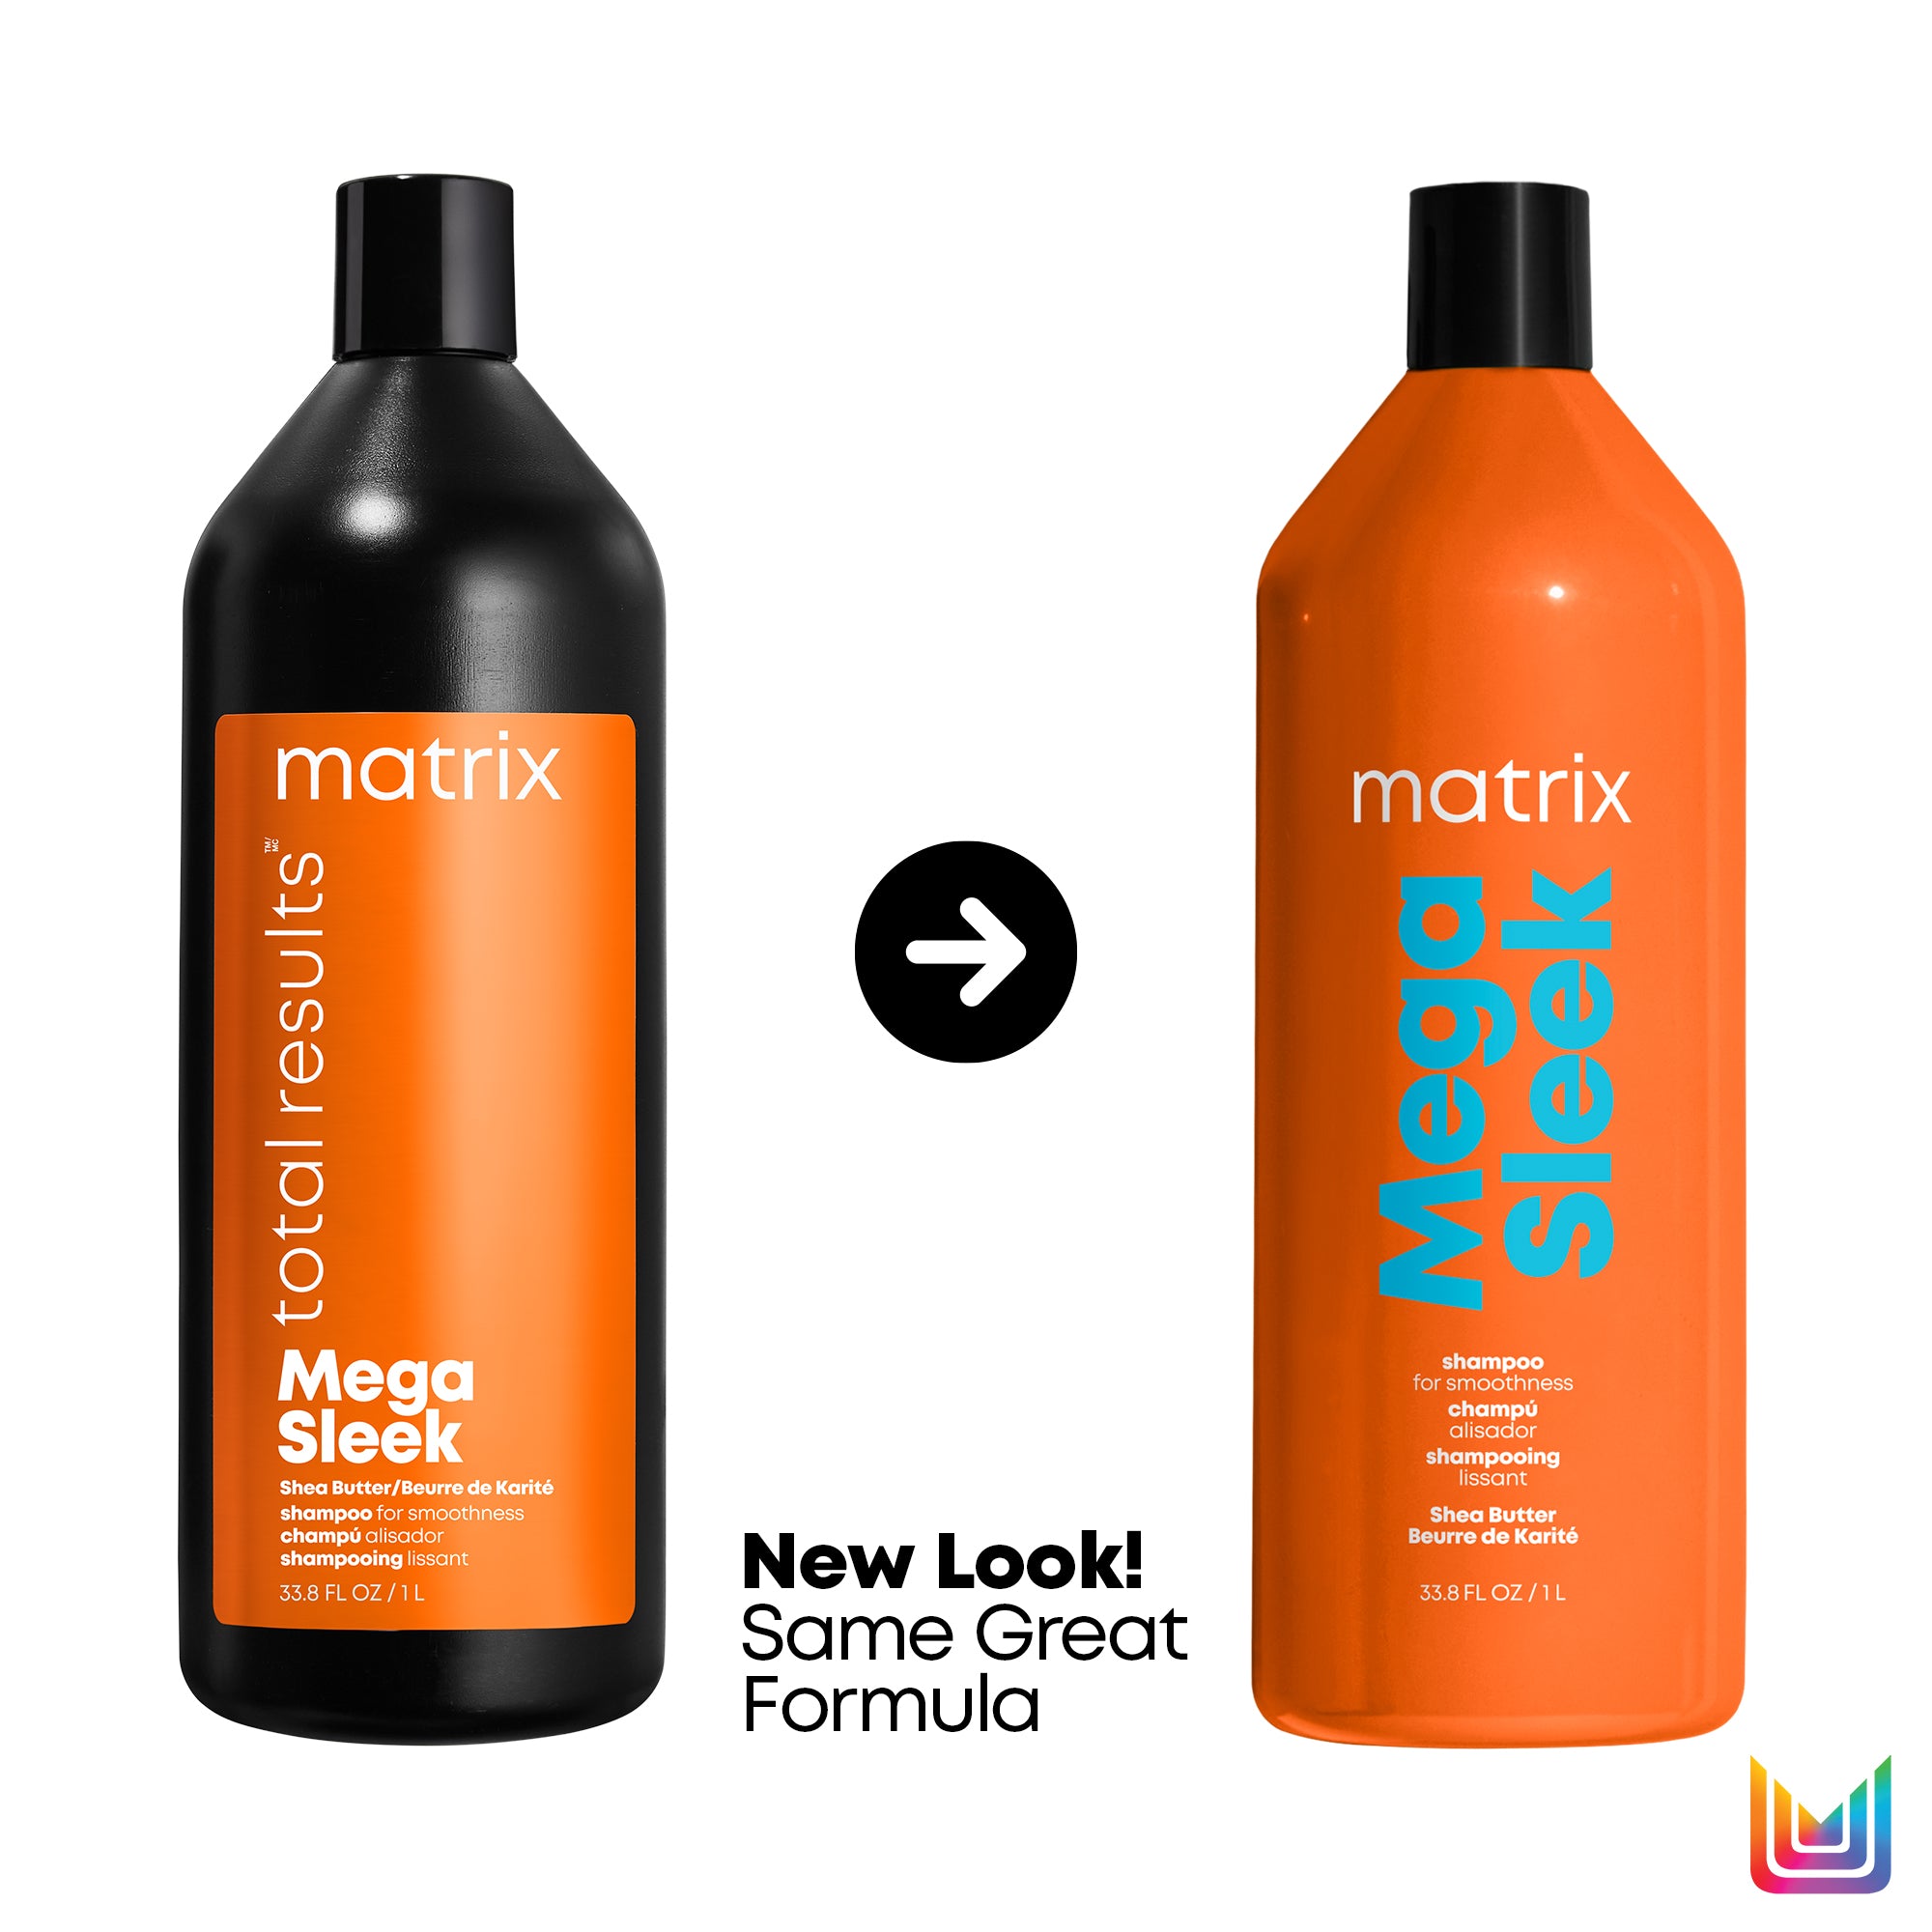 Matrix Mega Sleek Shampoo and Conditioner Liter Duo ($72 Value) / DUO